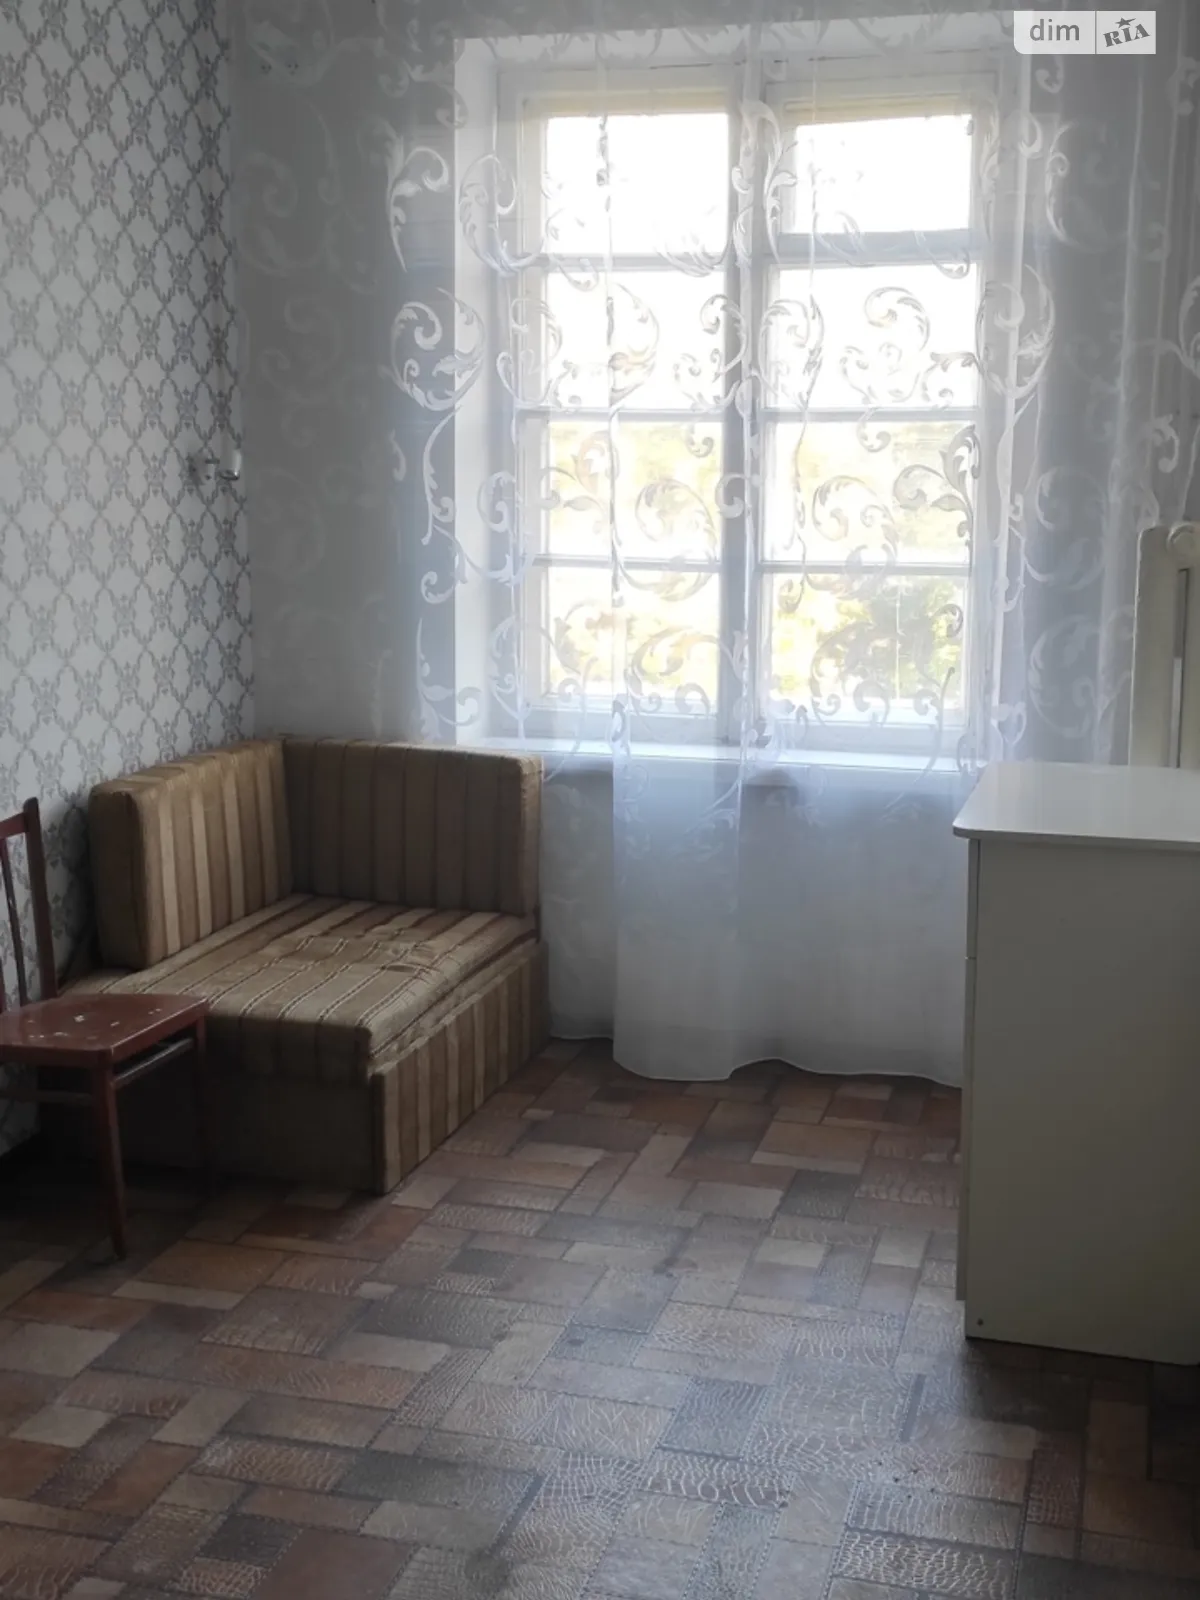 Продается комната 14 кв. м в Харькове - фото 2